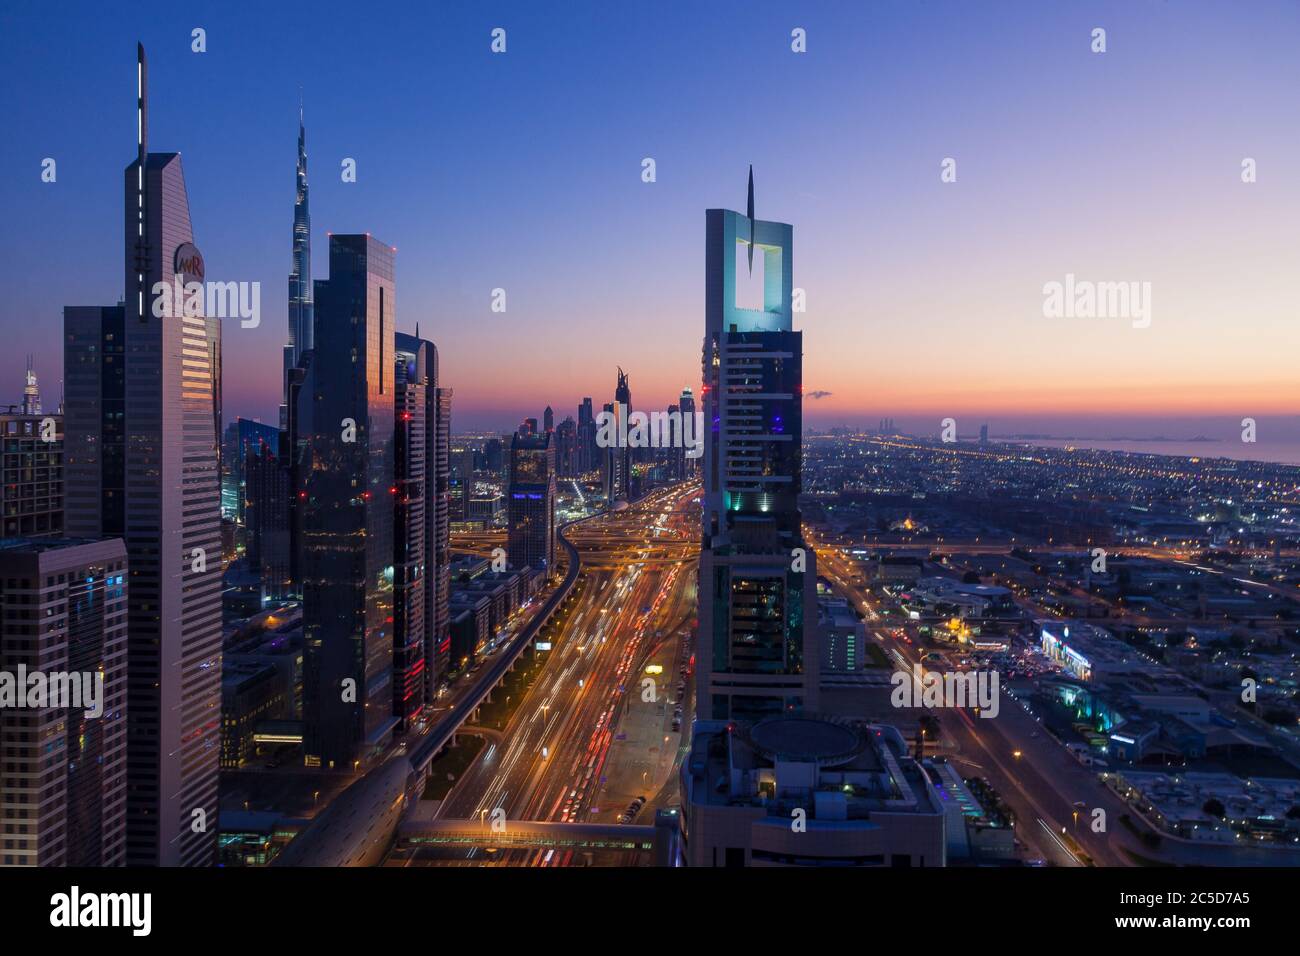 View of Sheik Zayed Road in Dubai Stock Photo